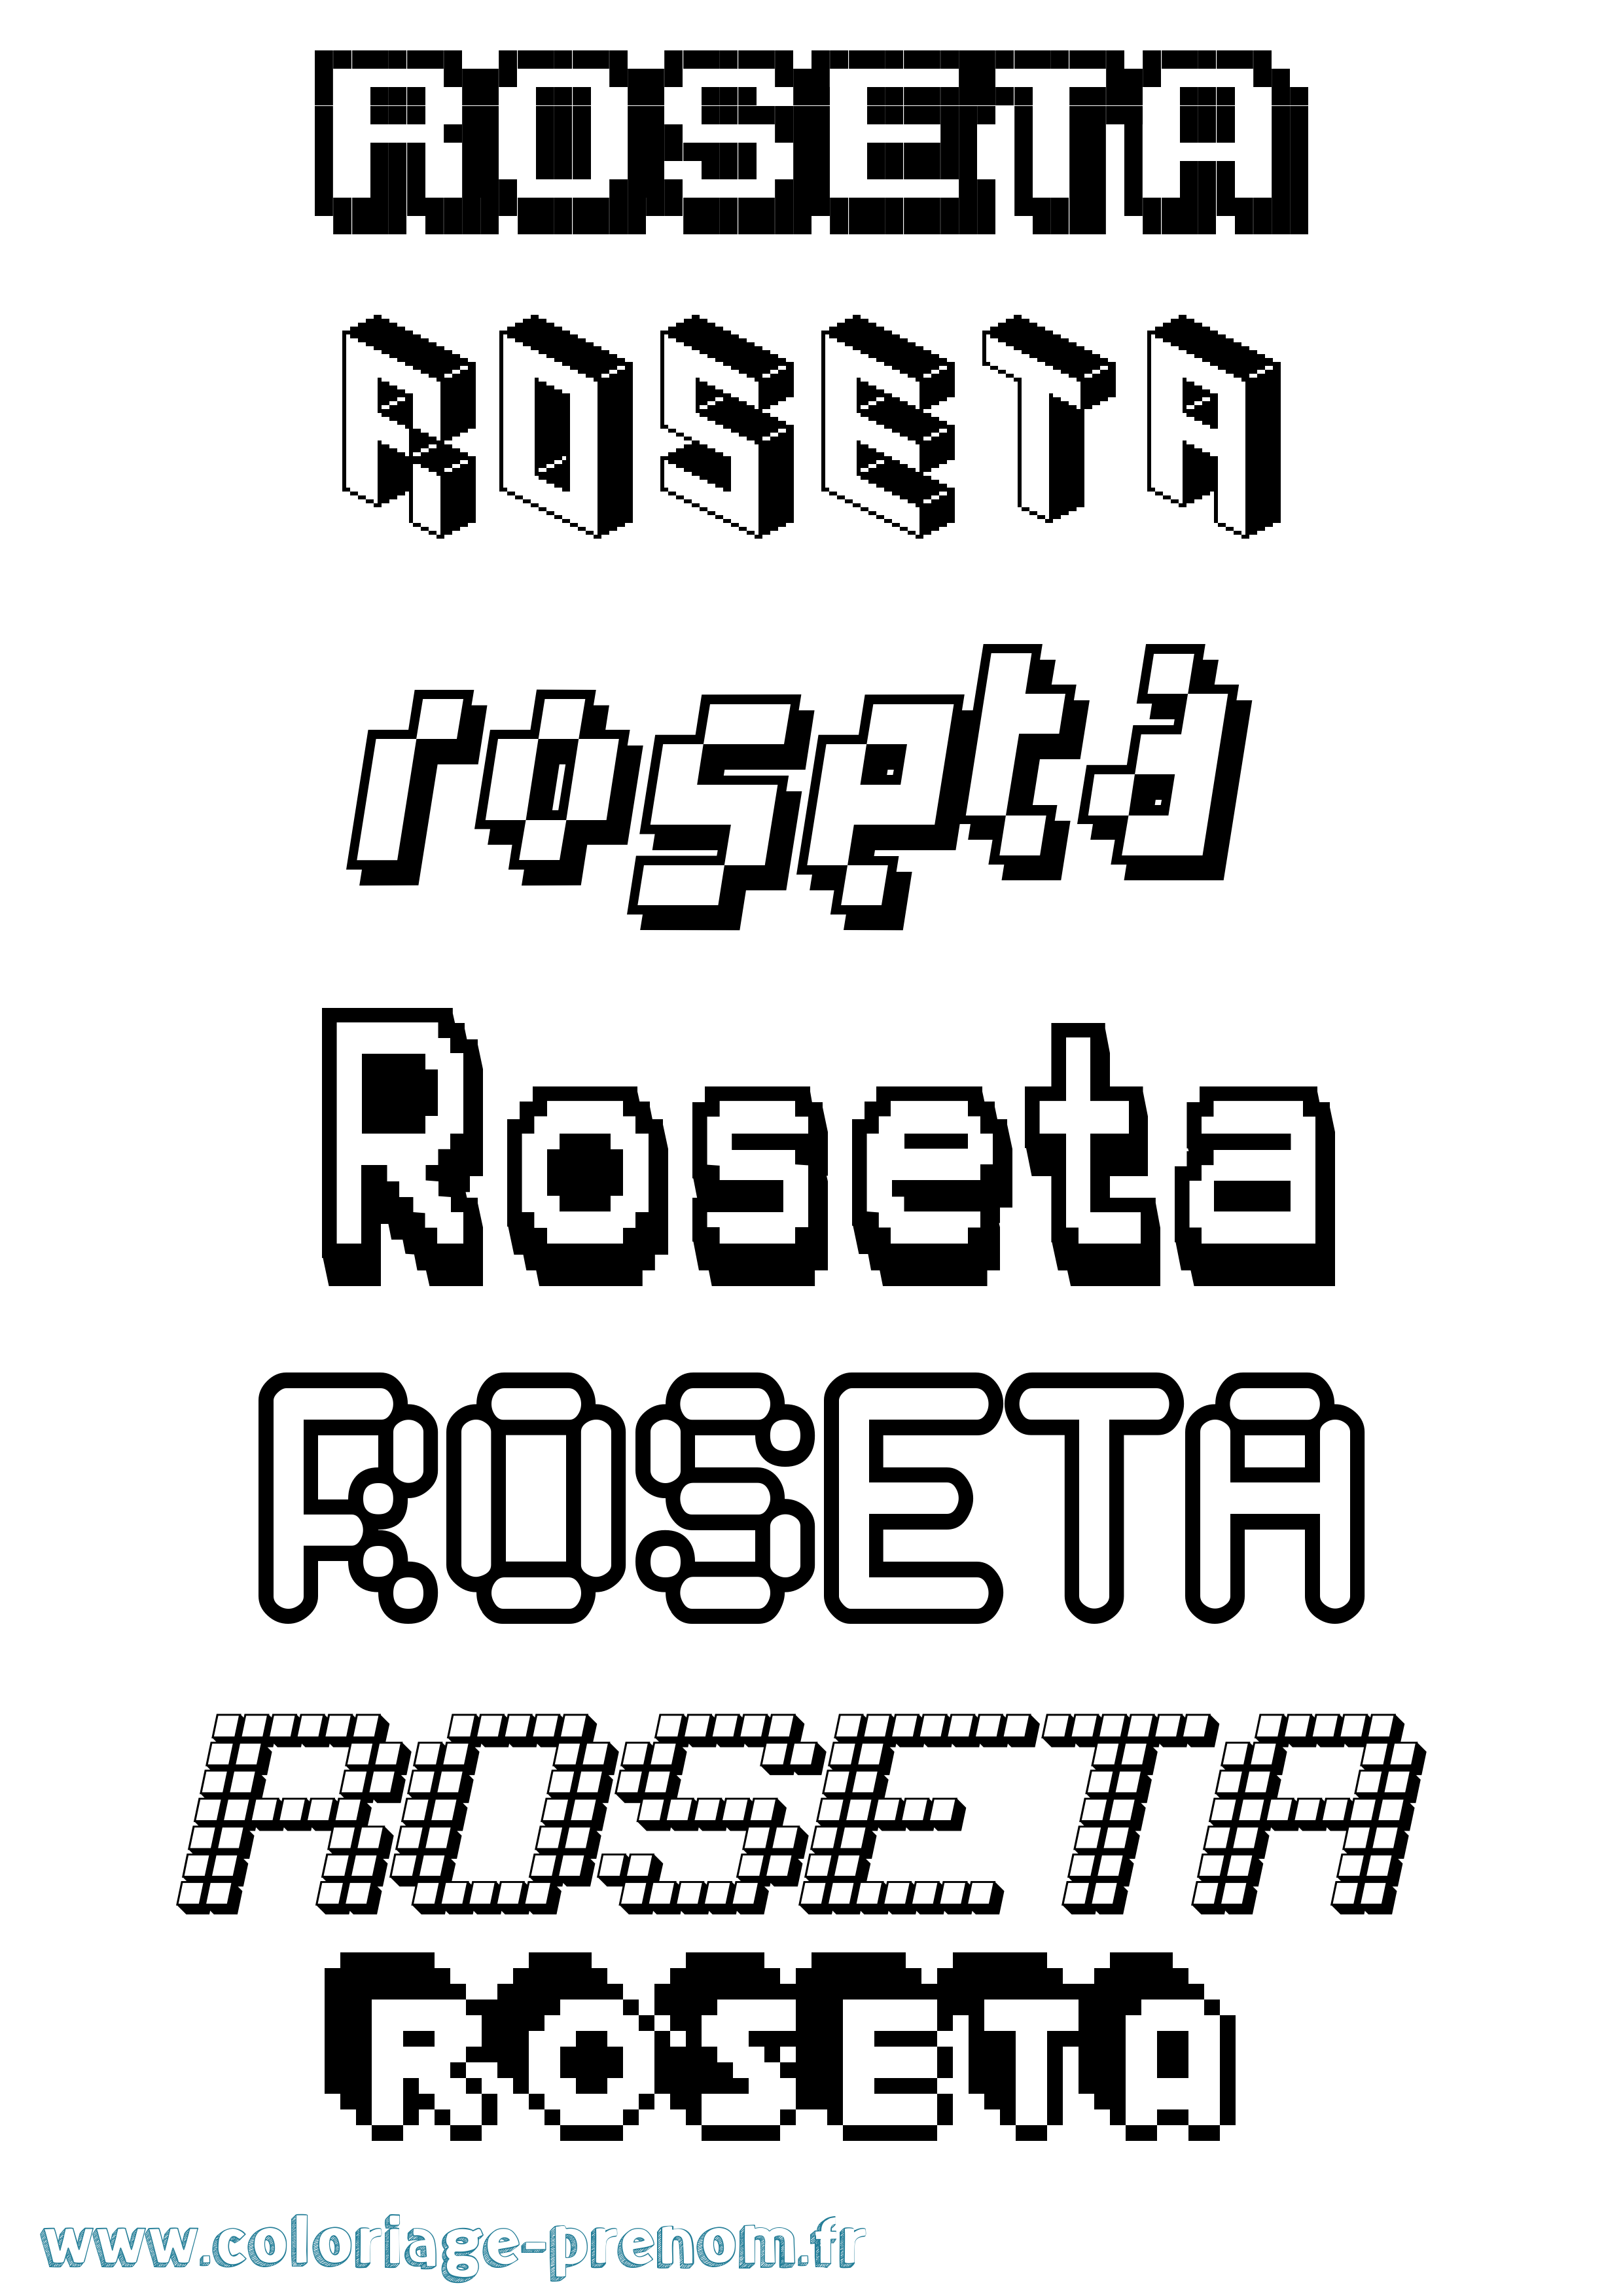 Coloriage prénom Roseta Pixel